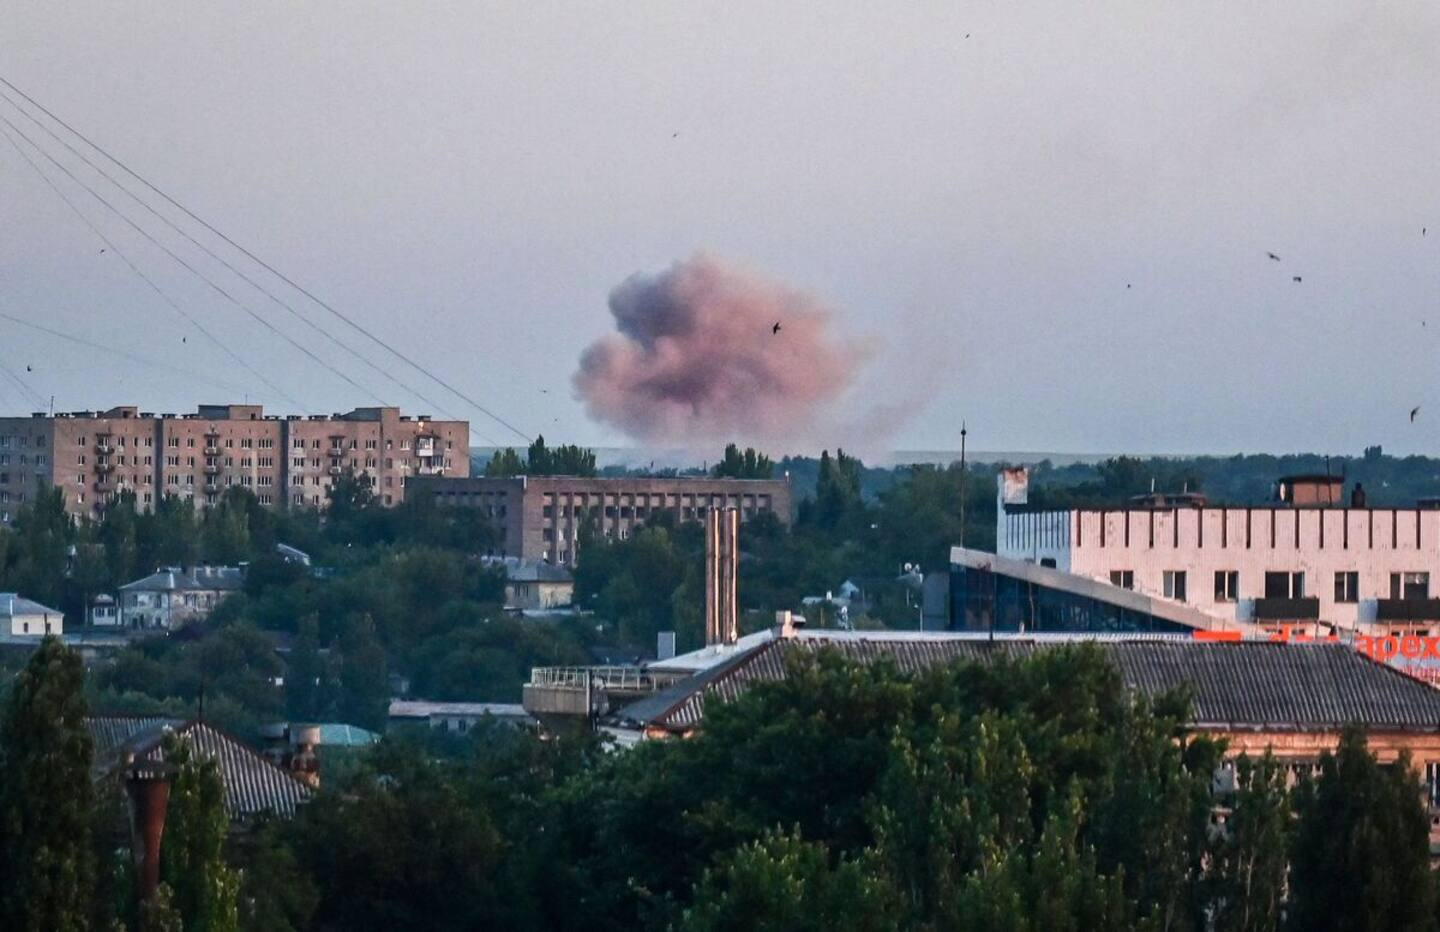 Ukraine: 4 dead, 22 injured in bombings in Donetsk, according to separatists